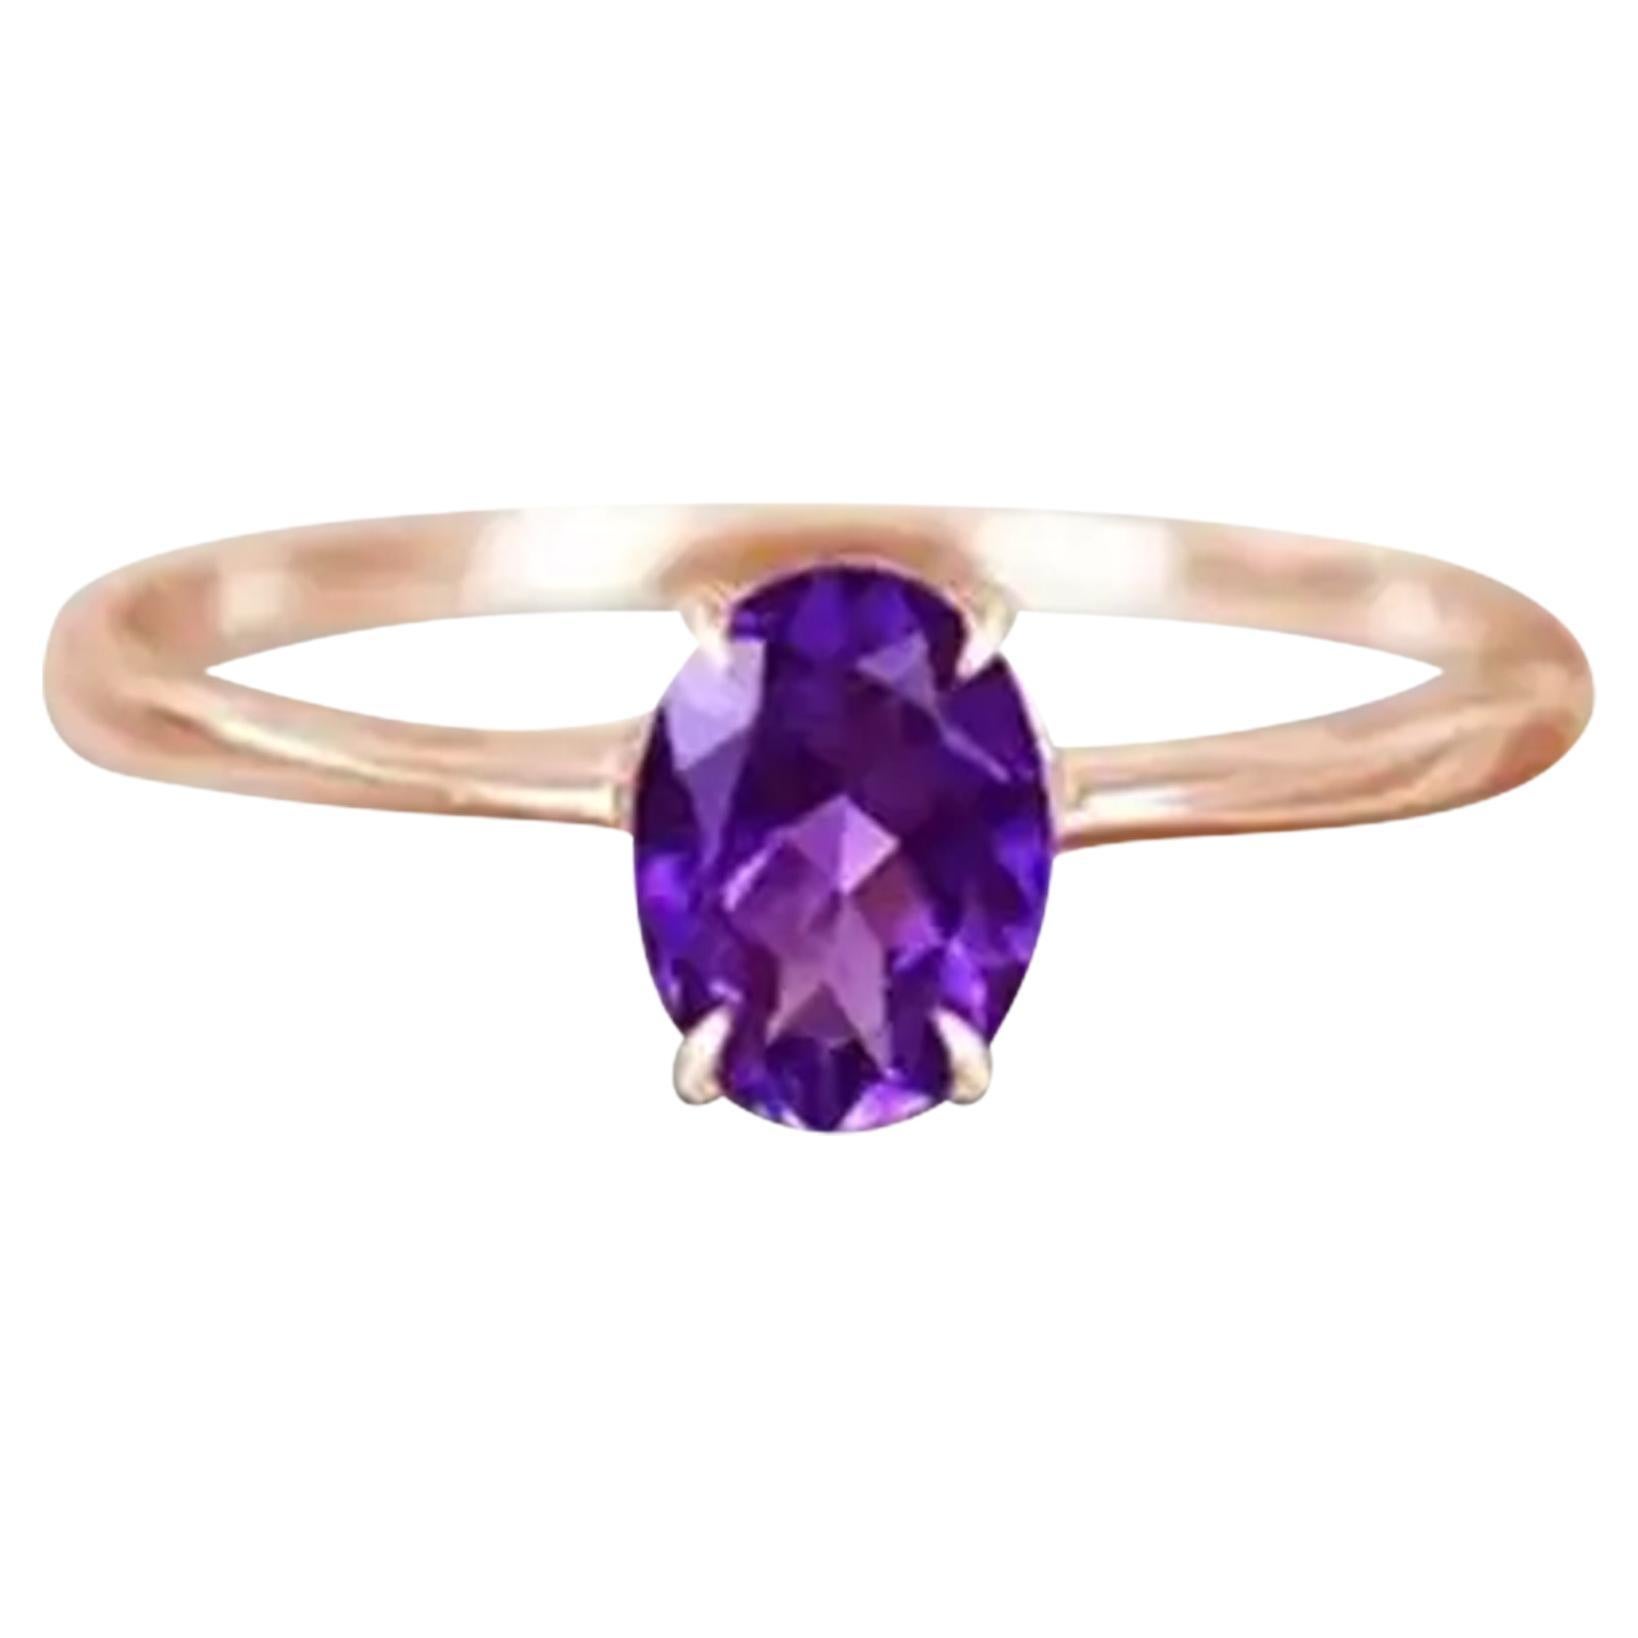 For Sale:  10k Gold Oval Gemstone 7x5 mm Oval Gemstone Ring Gemstone Engagement Ring